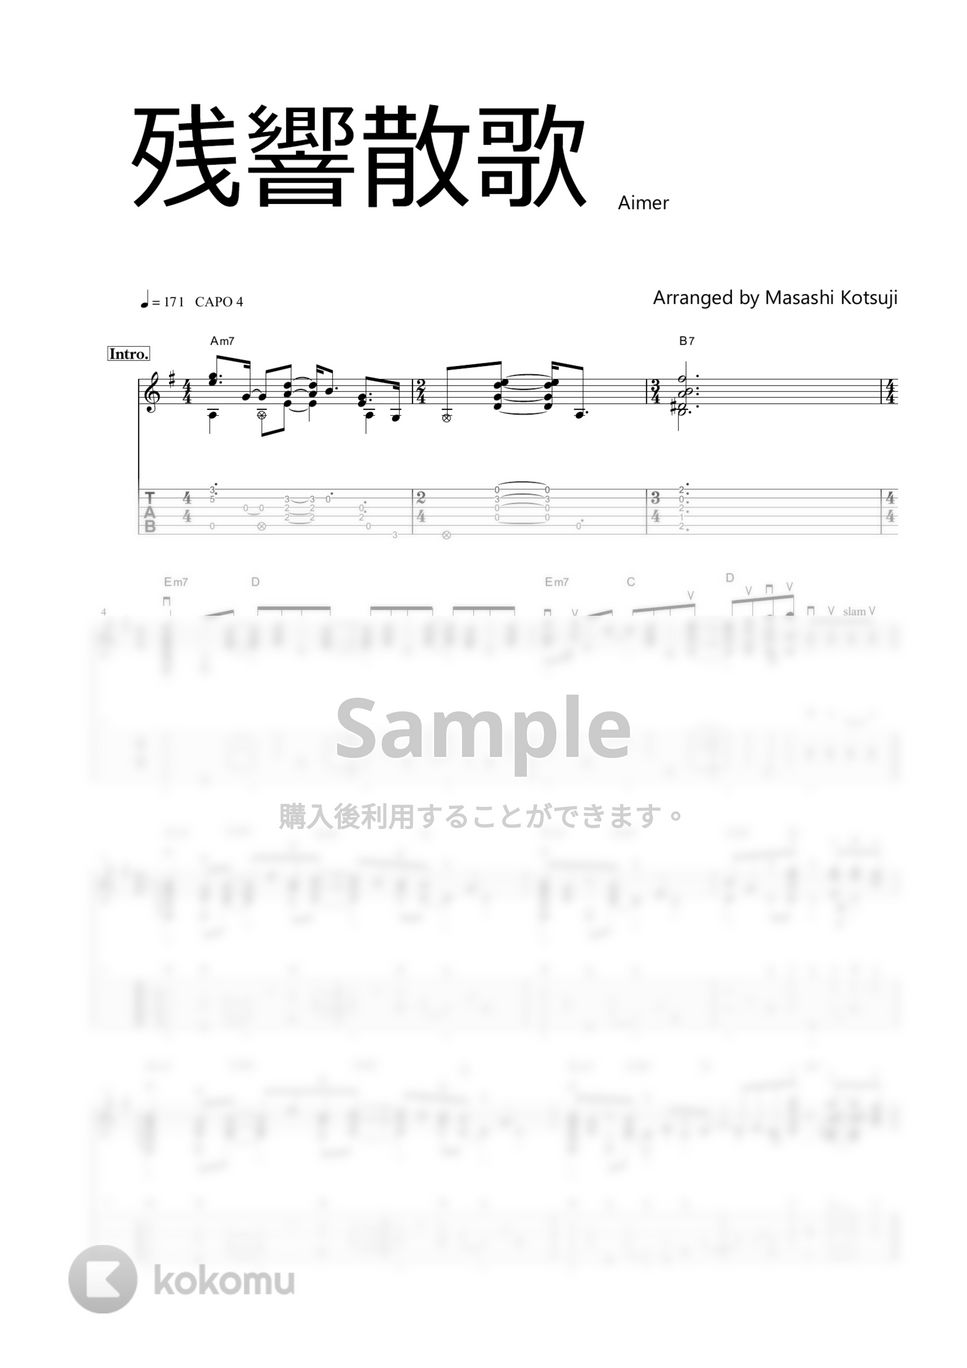 Aimer - 残響散歌　フルver. (鬼滅の刃 遊郭編) by Masashi Kotsuji